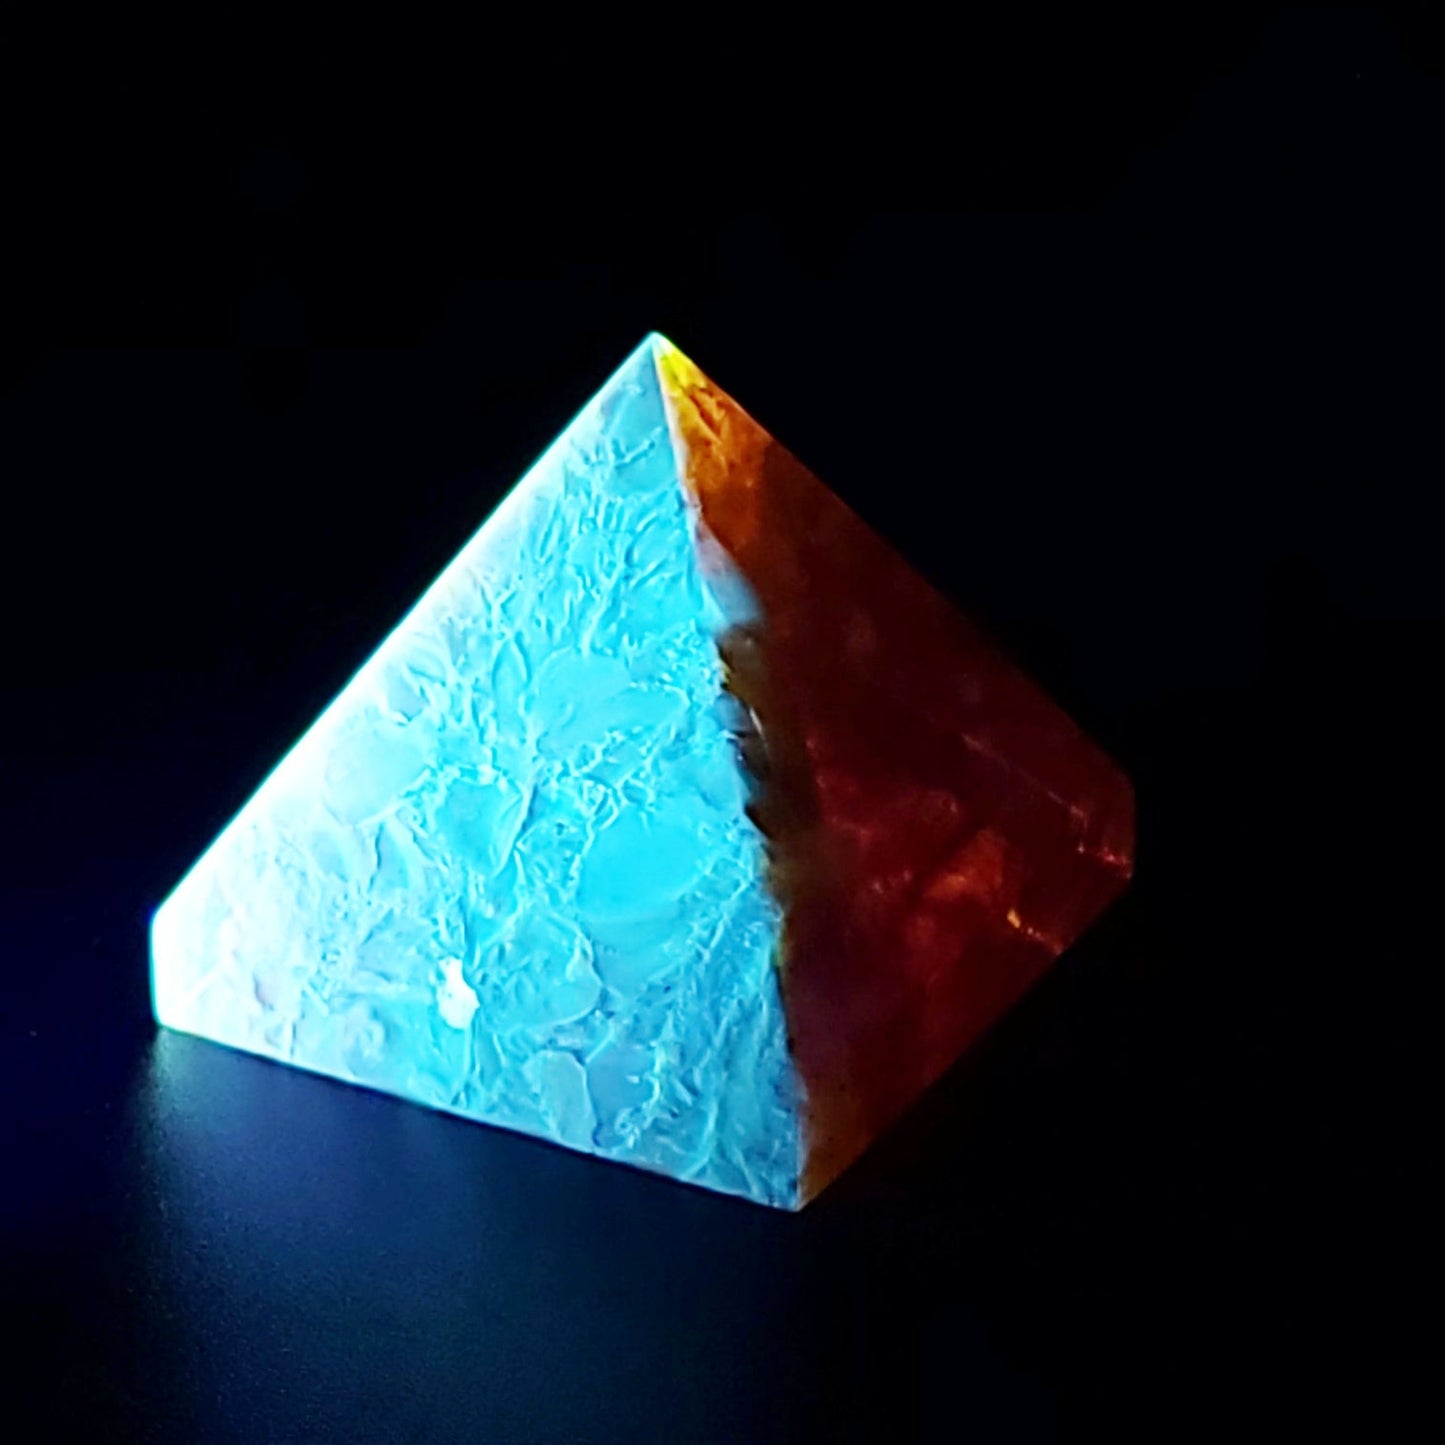 Amber Pyramid 1" 28mm